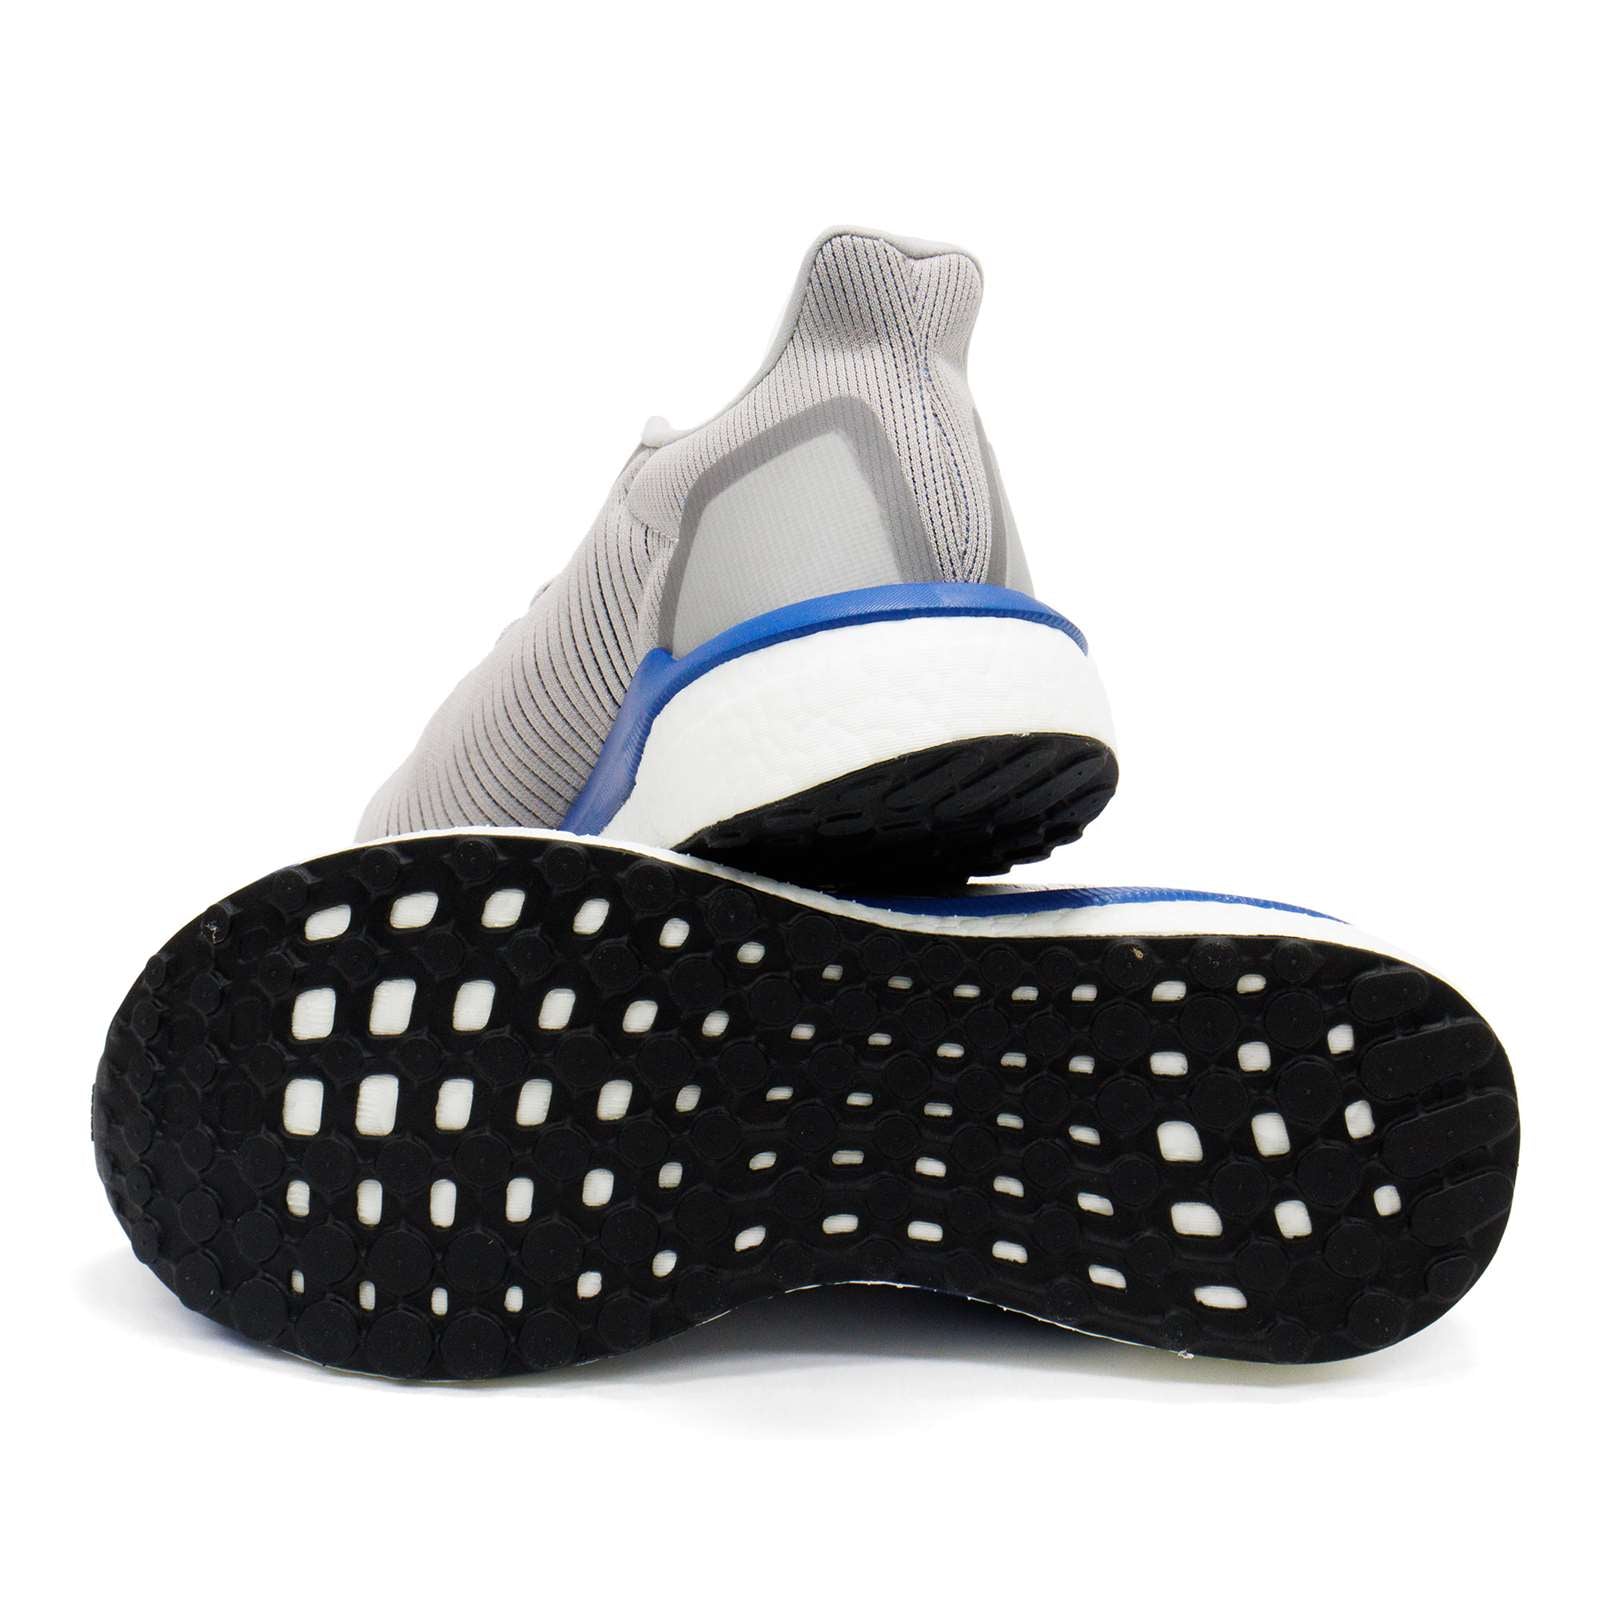 Adidas Men Solar Drive 19 Running Shoes